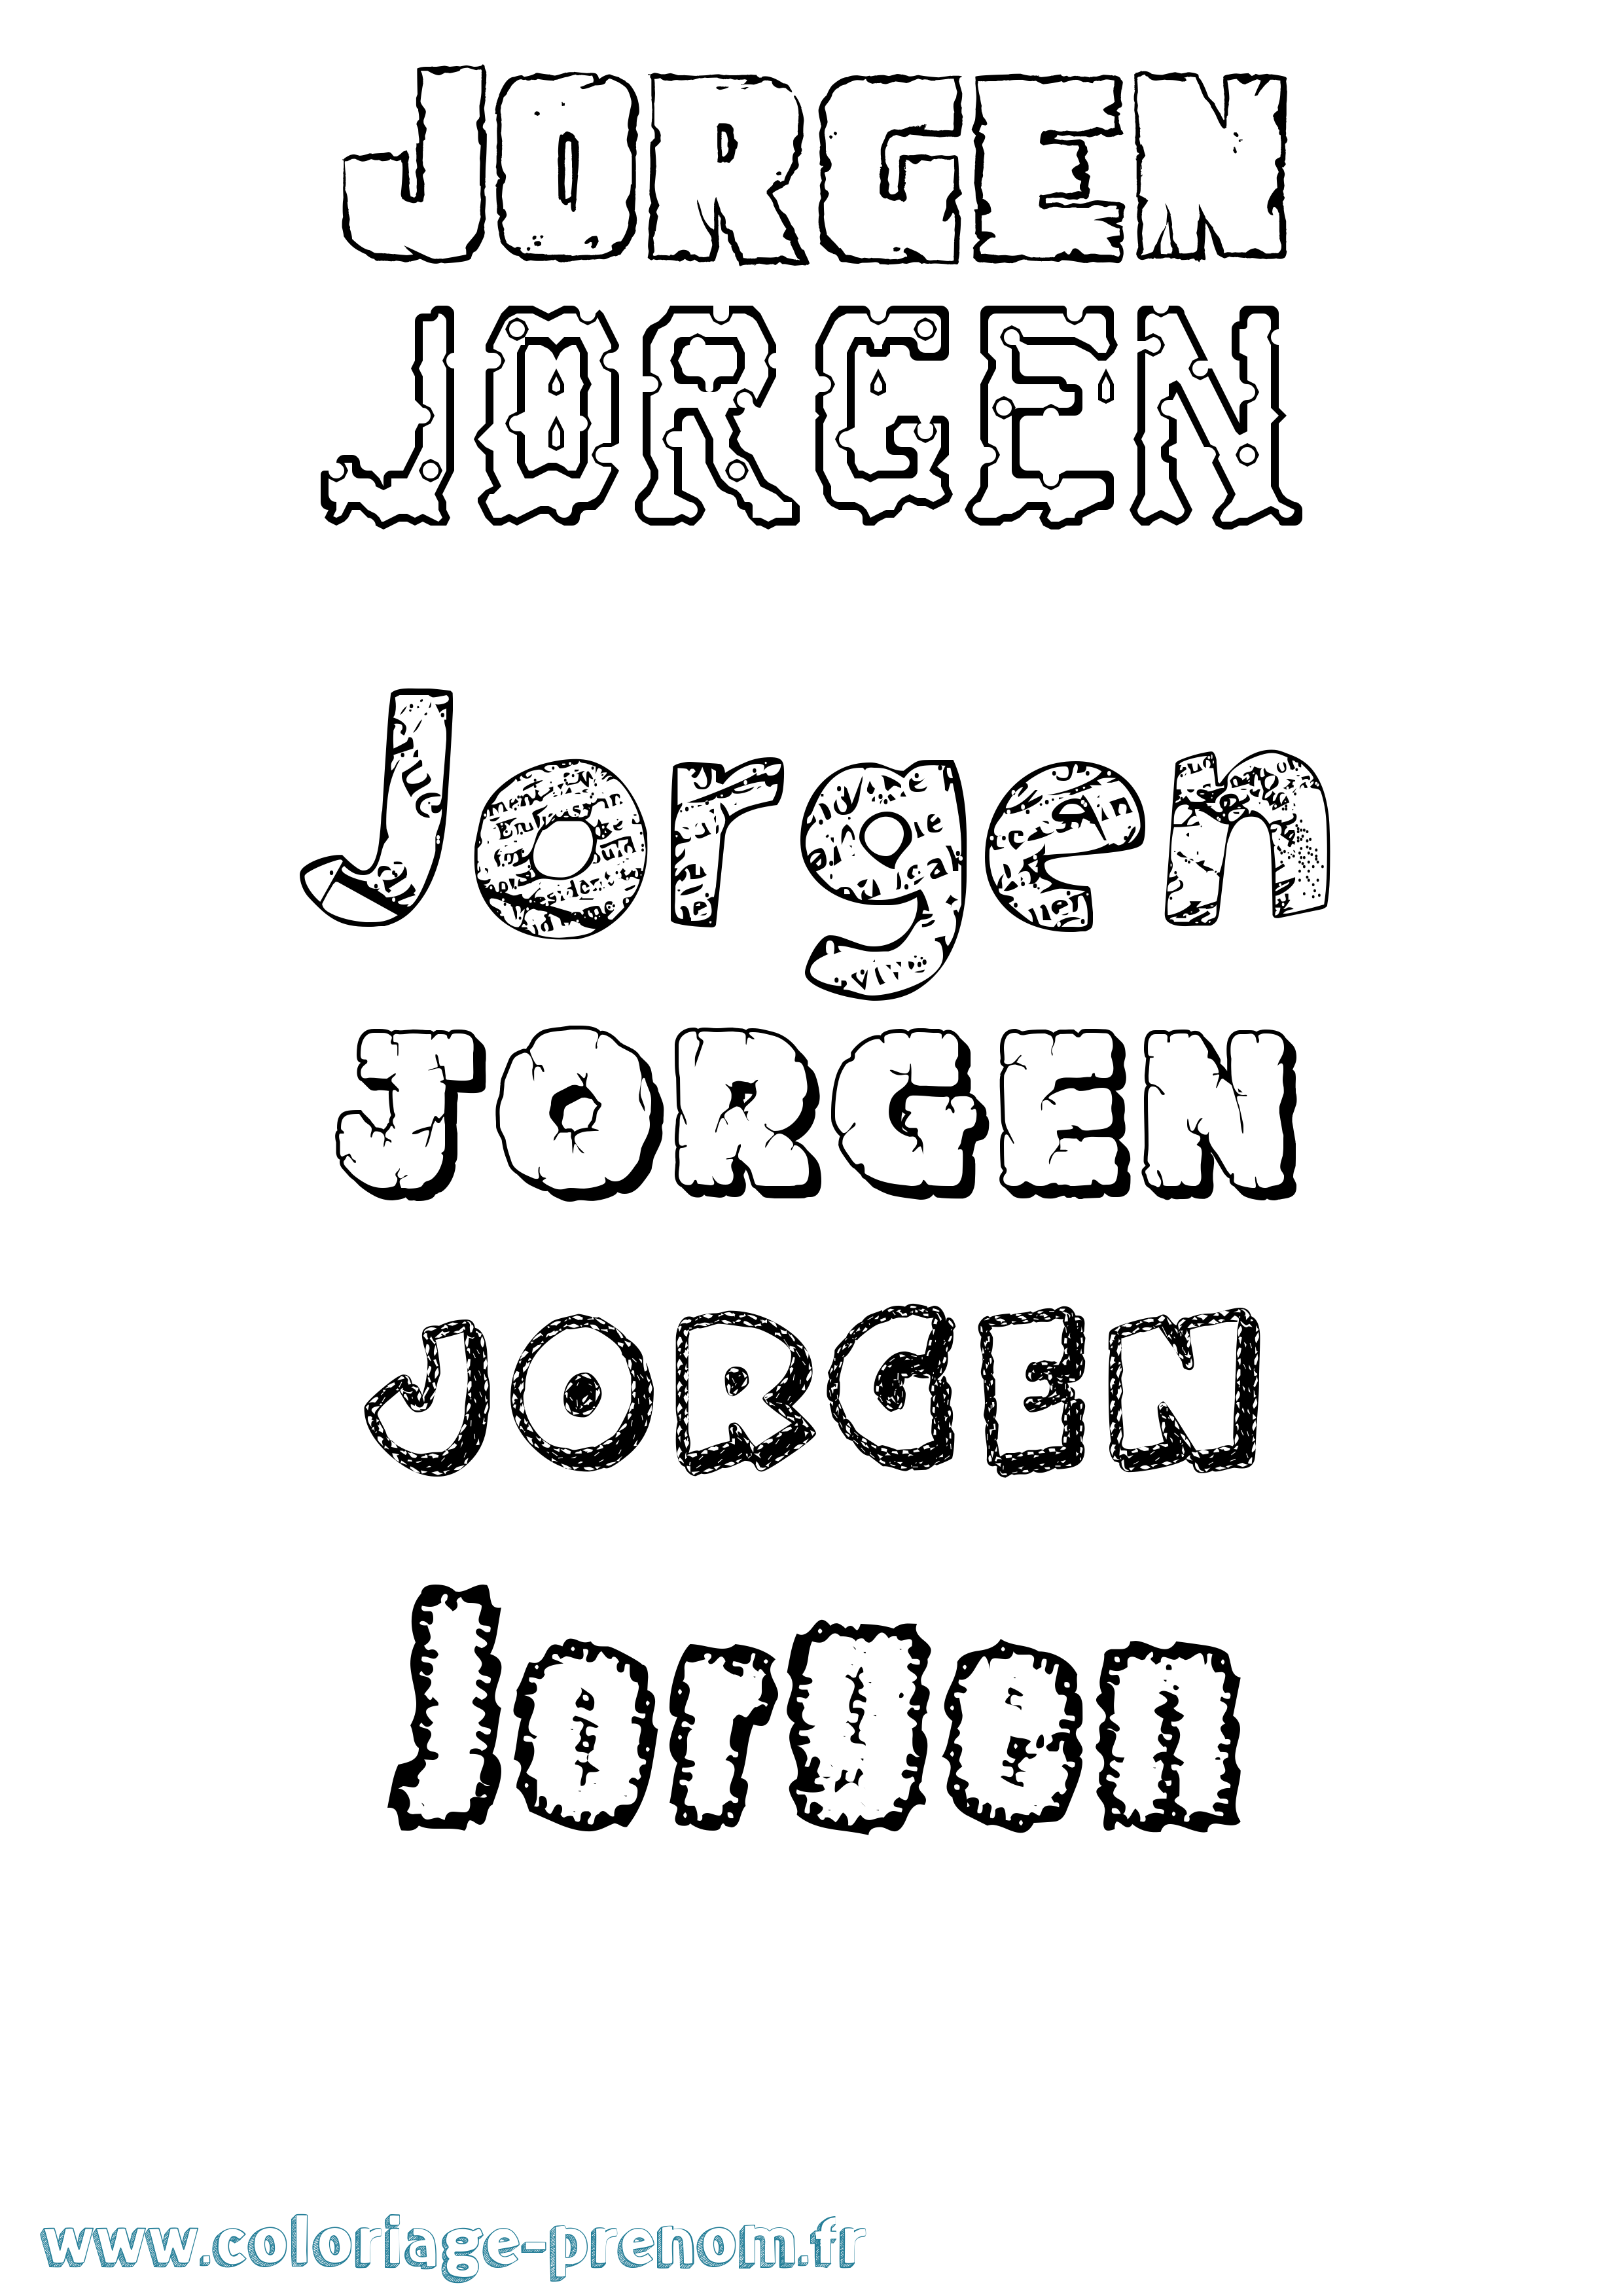 Coloriage prénom Jørgen